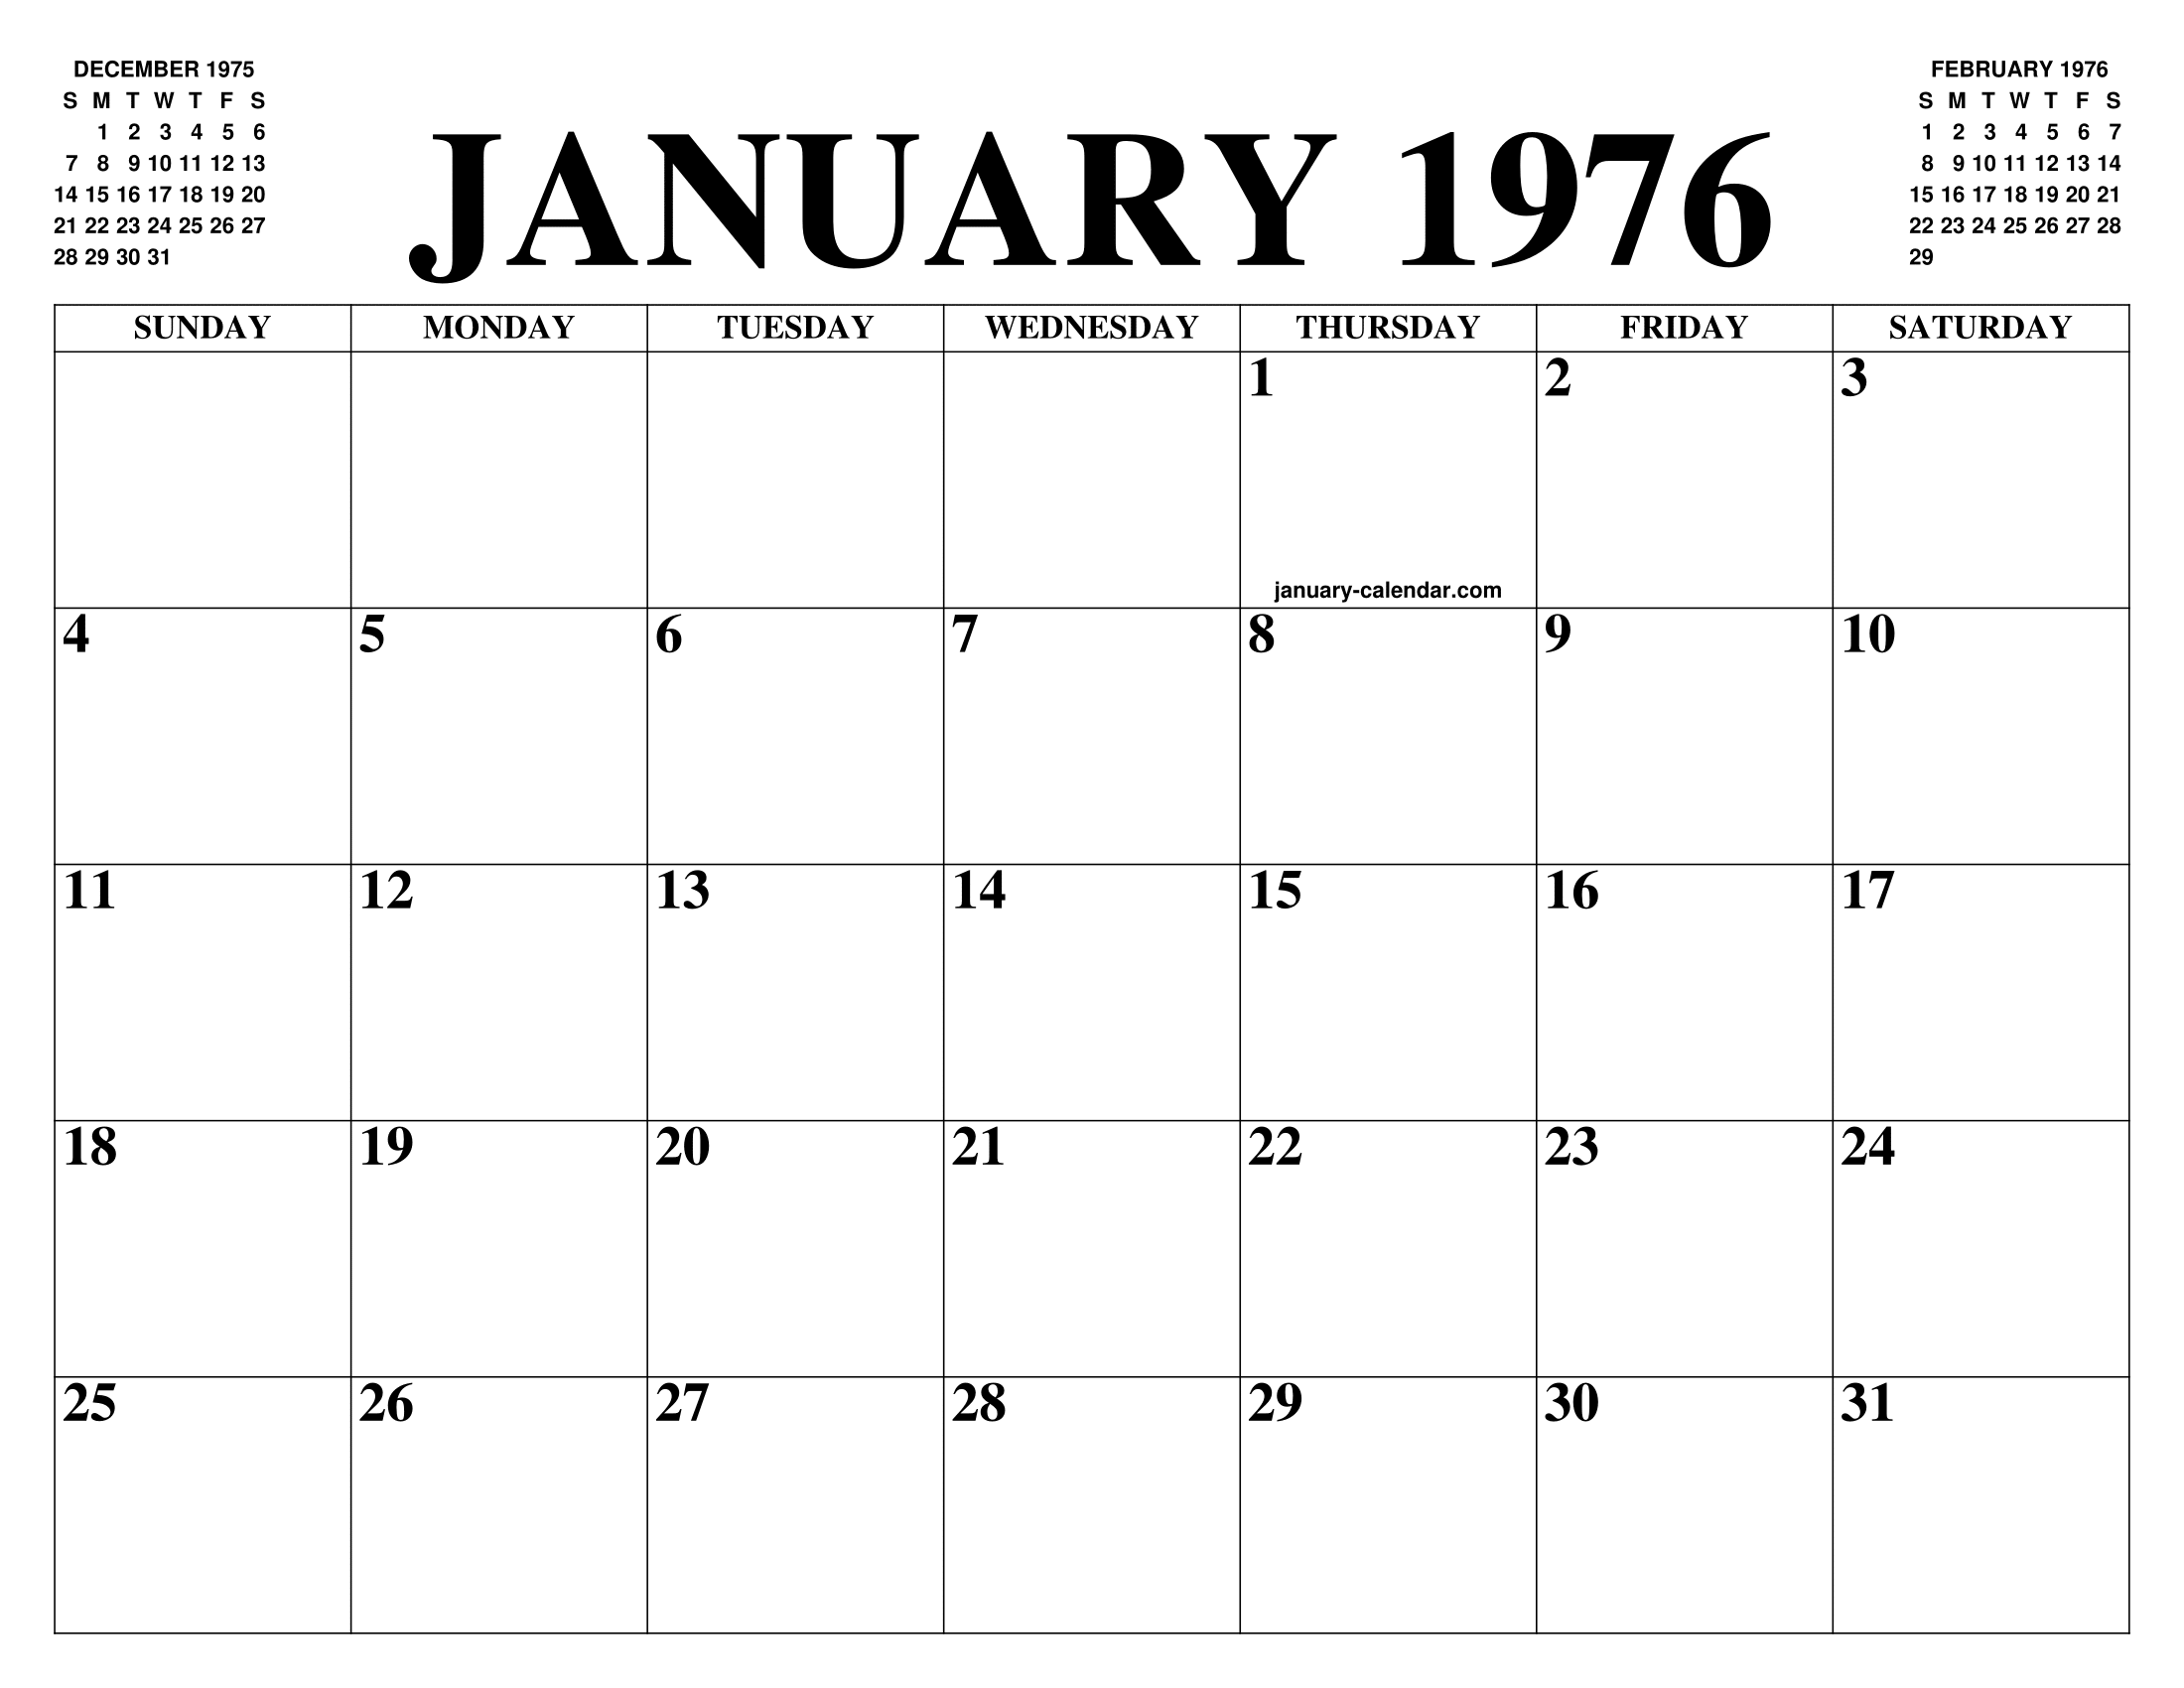 JANUARY 1976 CALENDAR OF THE MONTH FREE PRINTABLE JANUARY CALENDAR OF